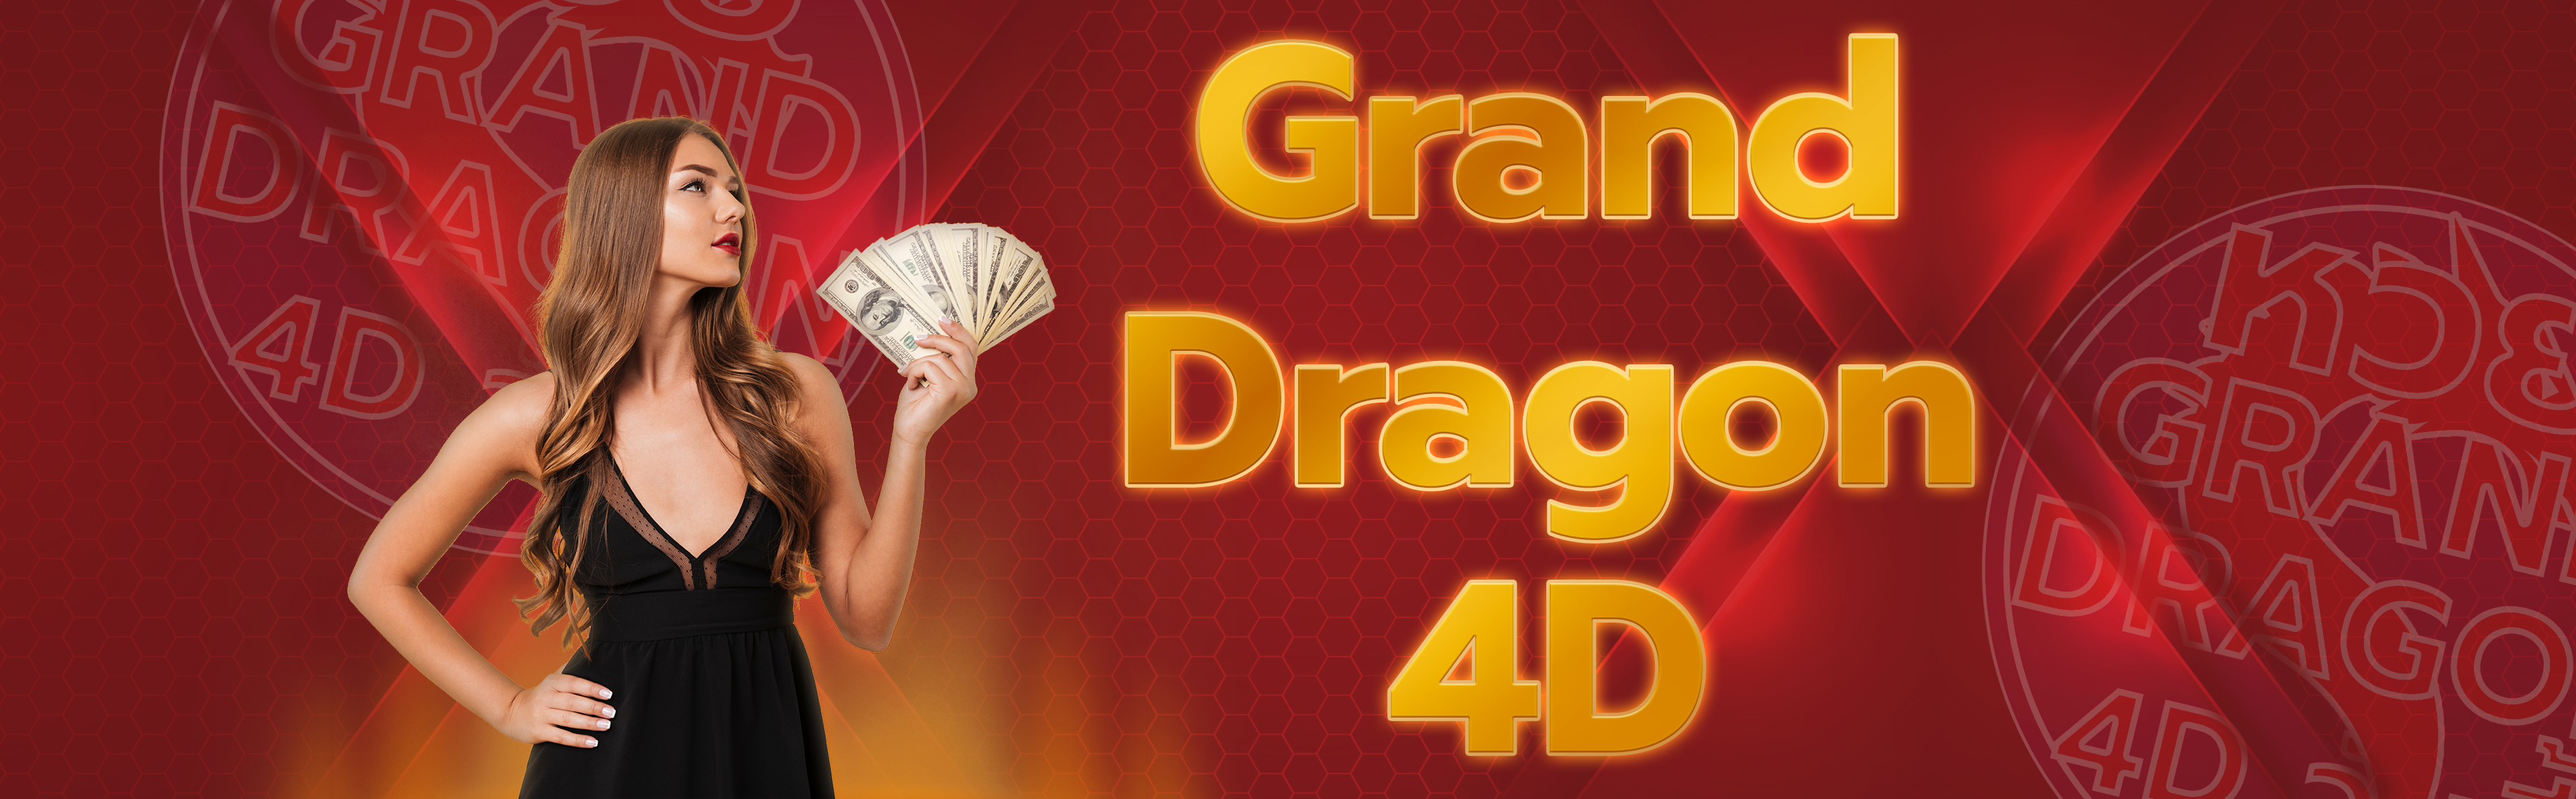 Grand Dragon 4D